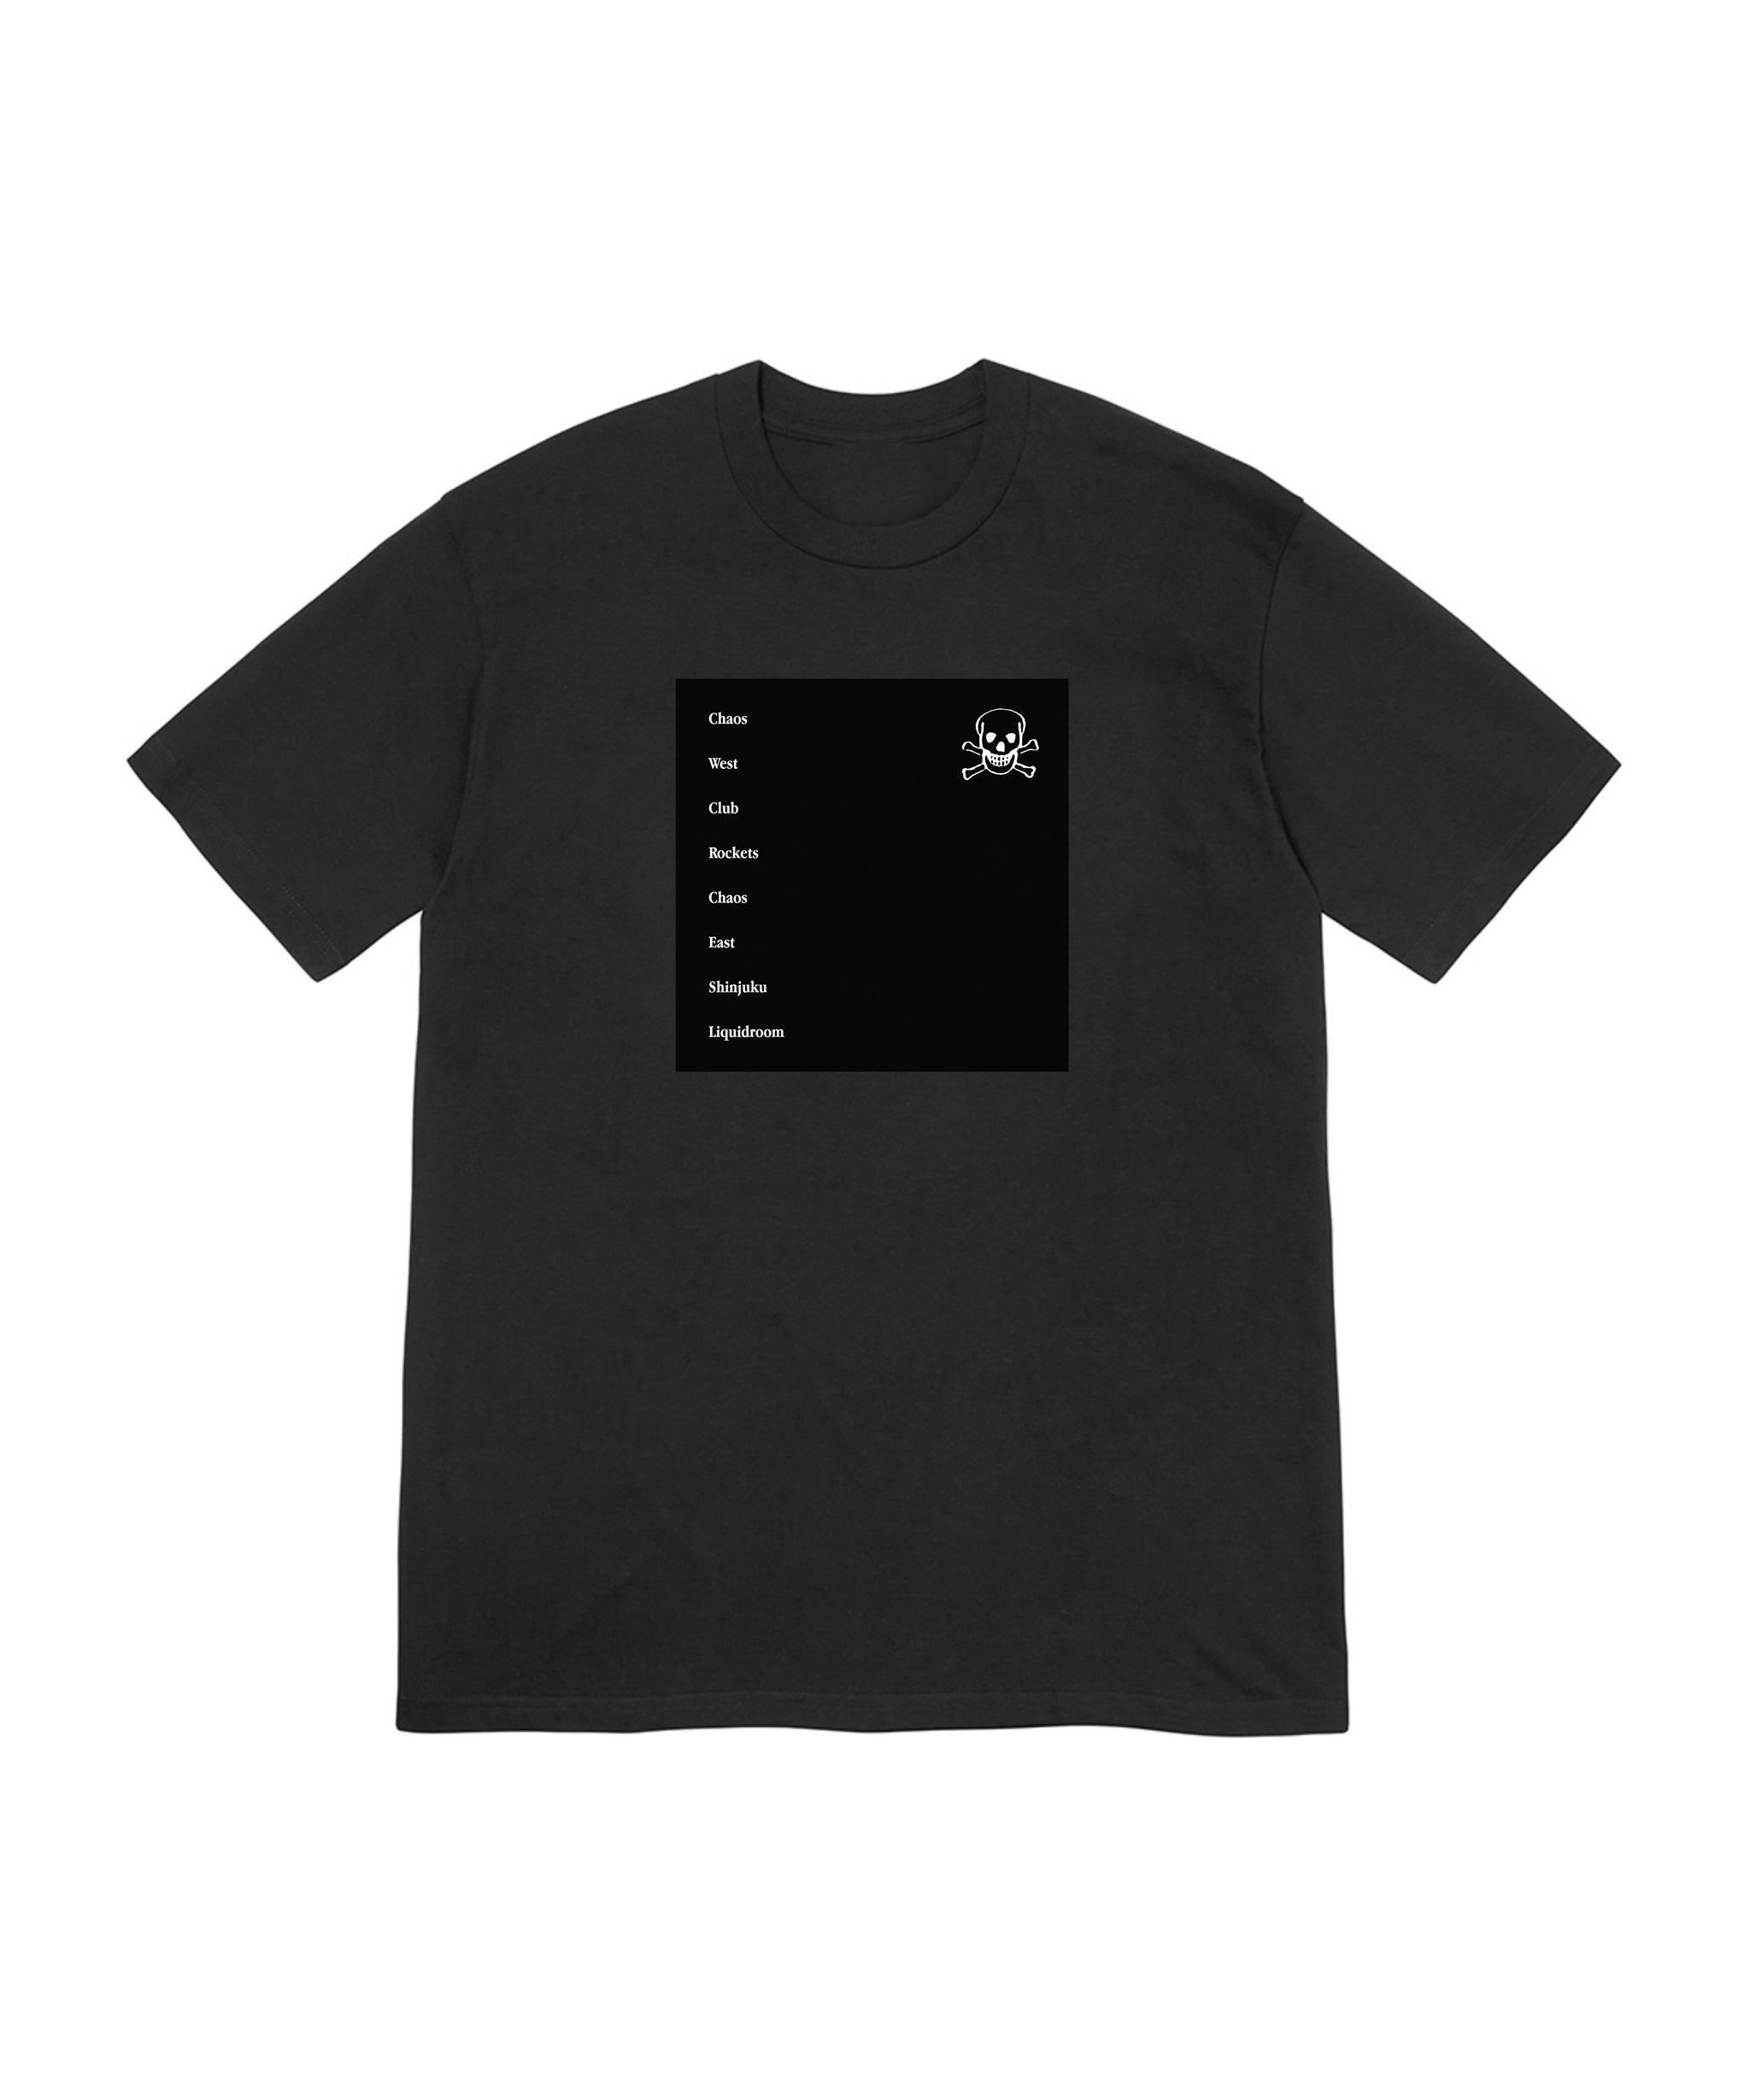 CHAOS 90's edition T-shirt Black/Black